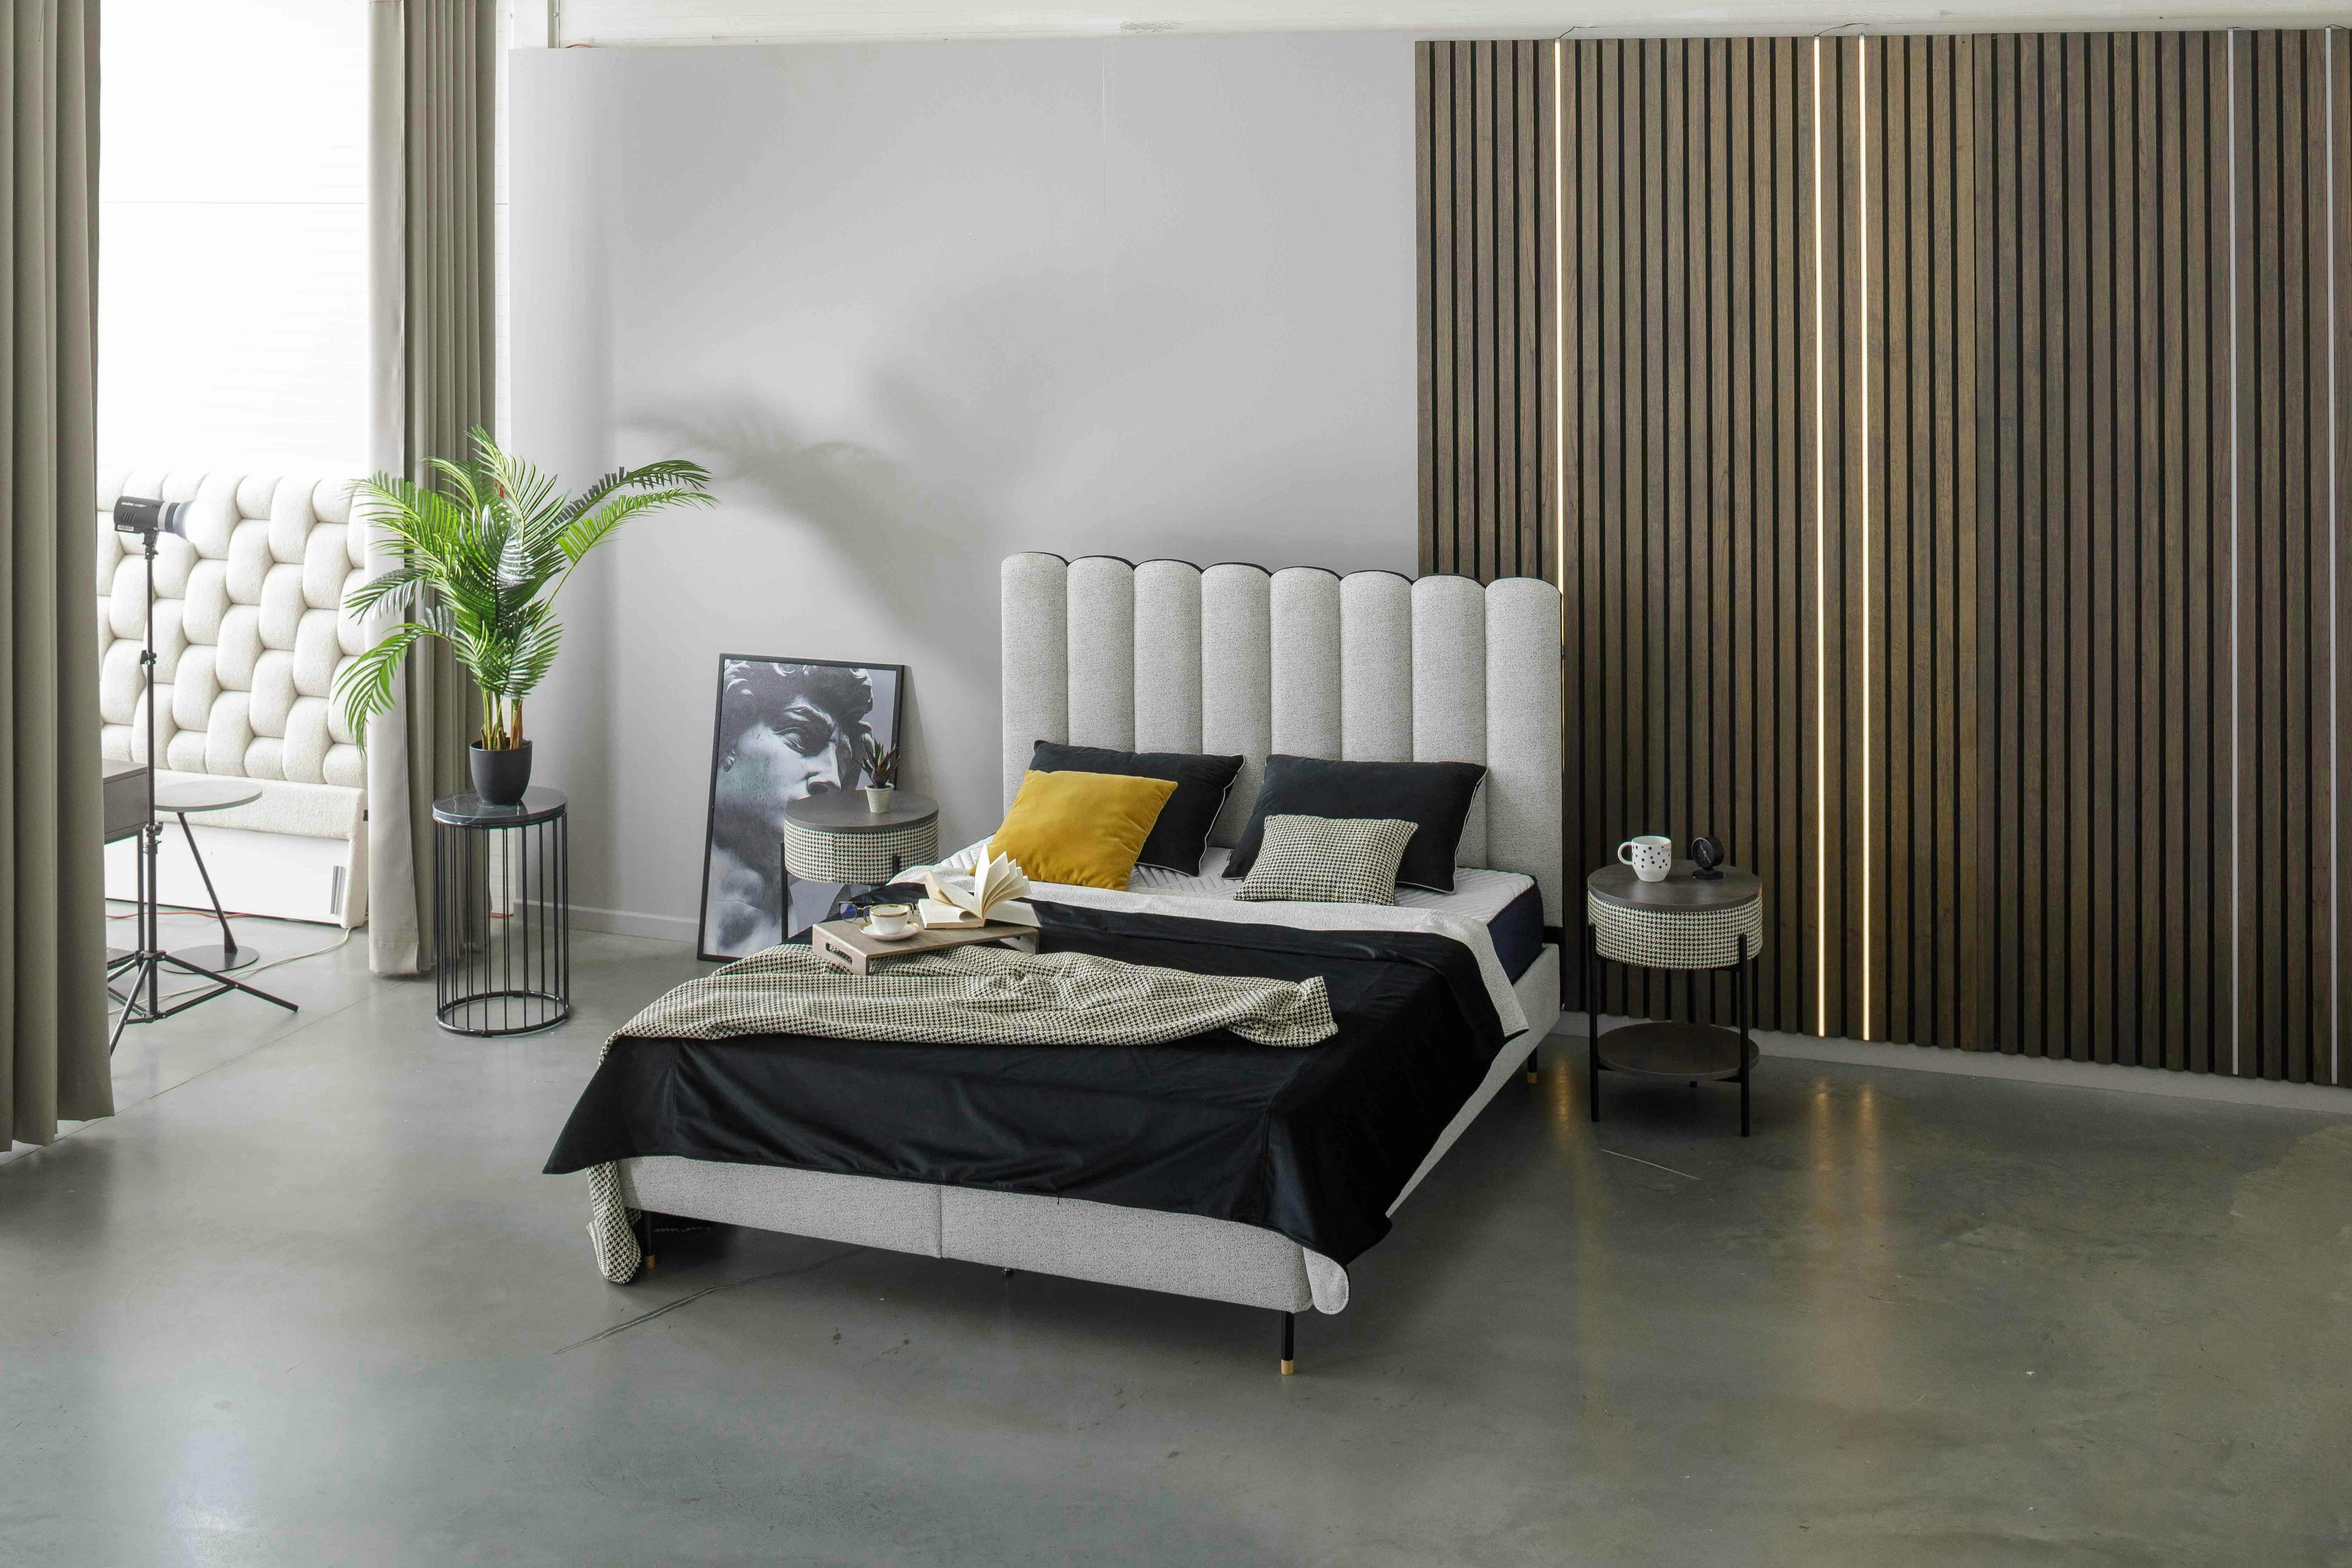 indoors interior design wood panels floor plant bed furniture